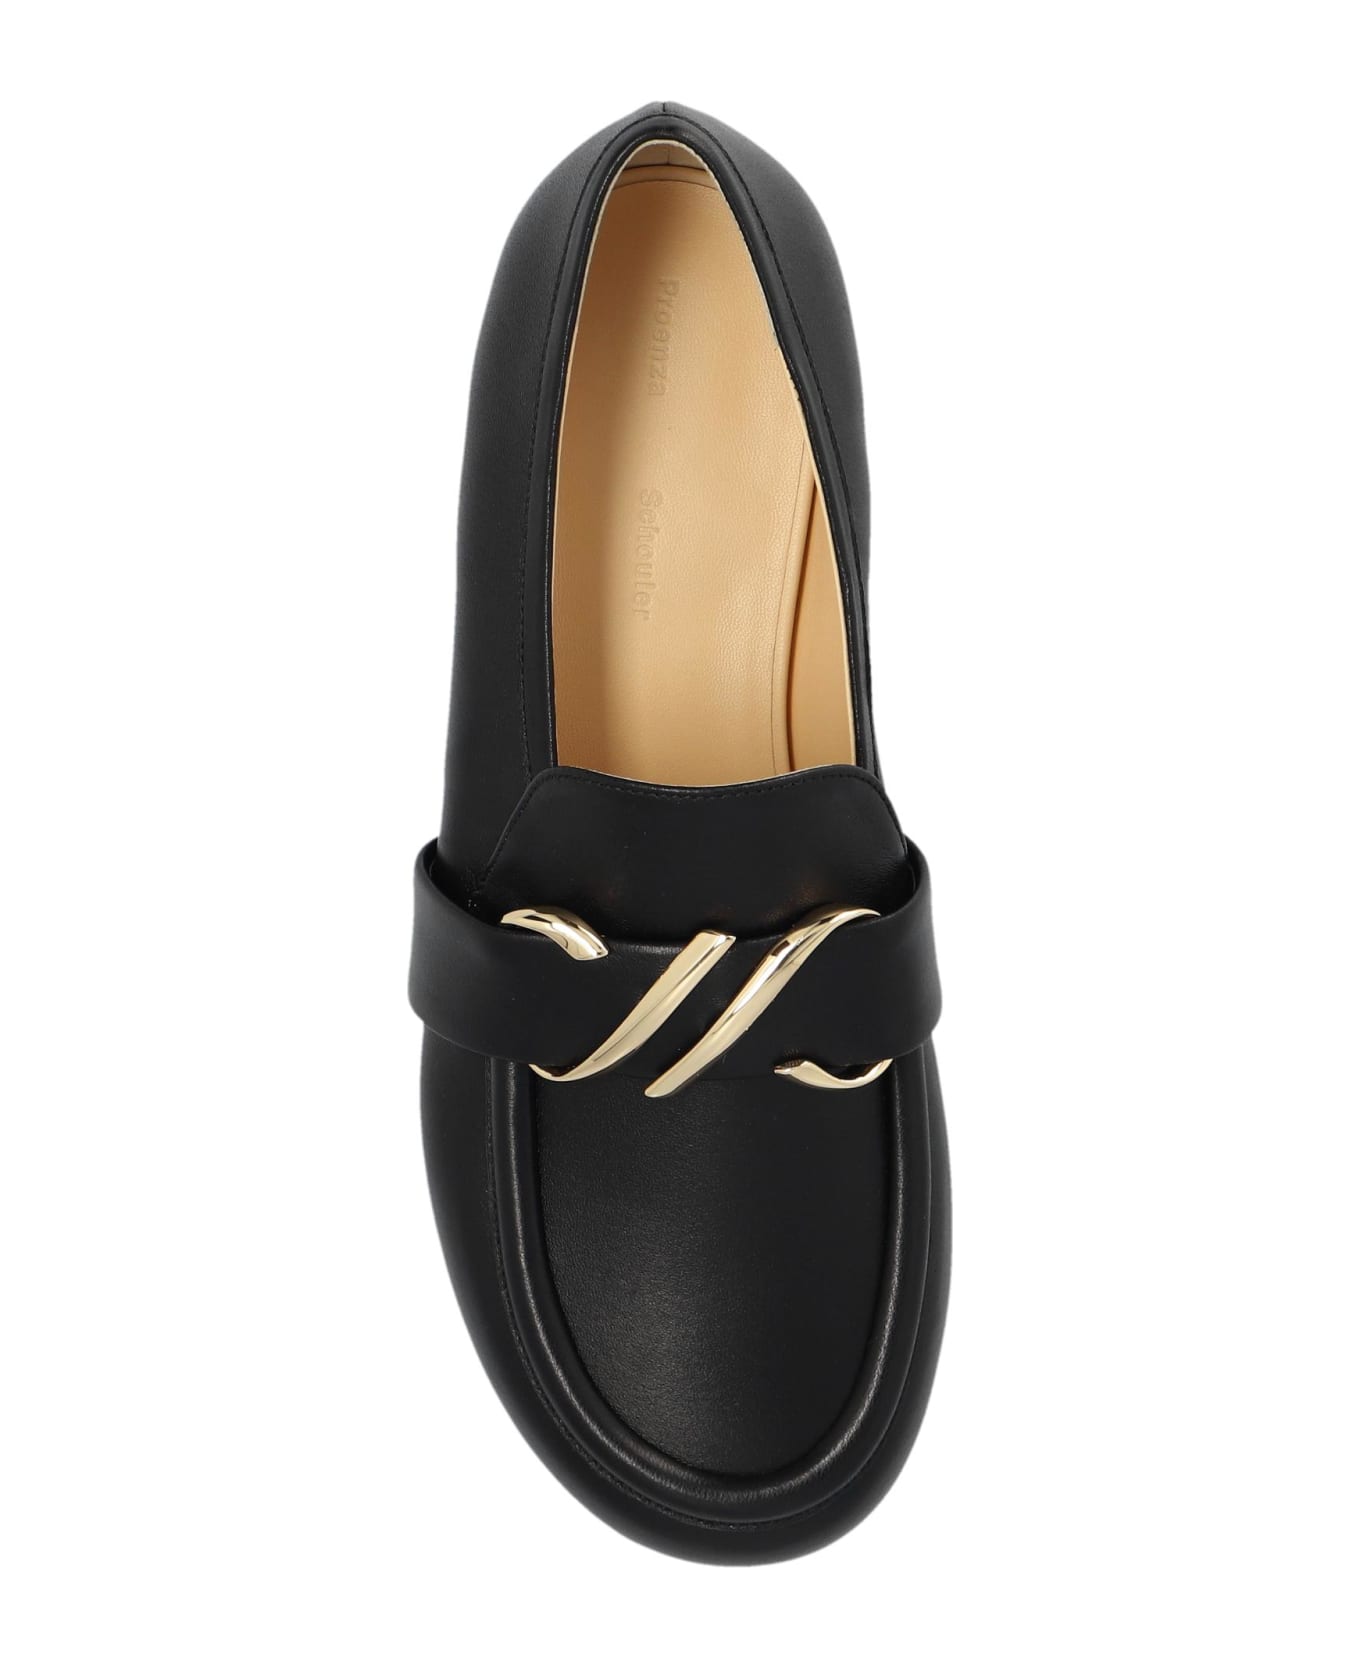 Proenza Schouler Leather Shoes - Black フラットシューズ